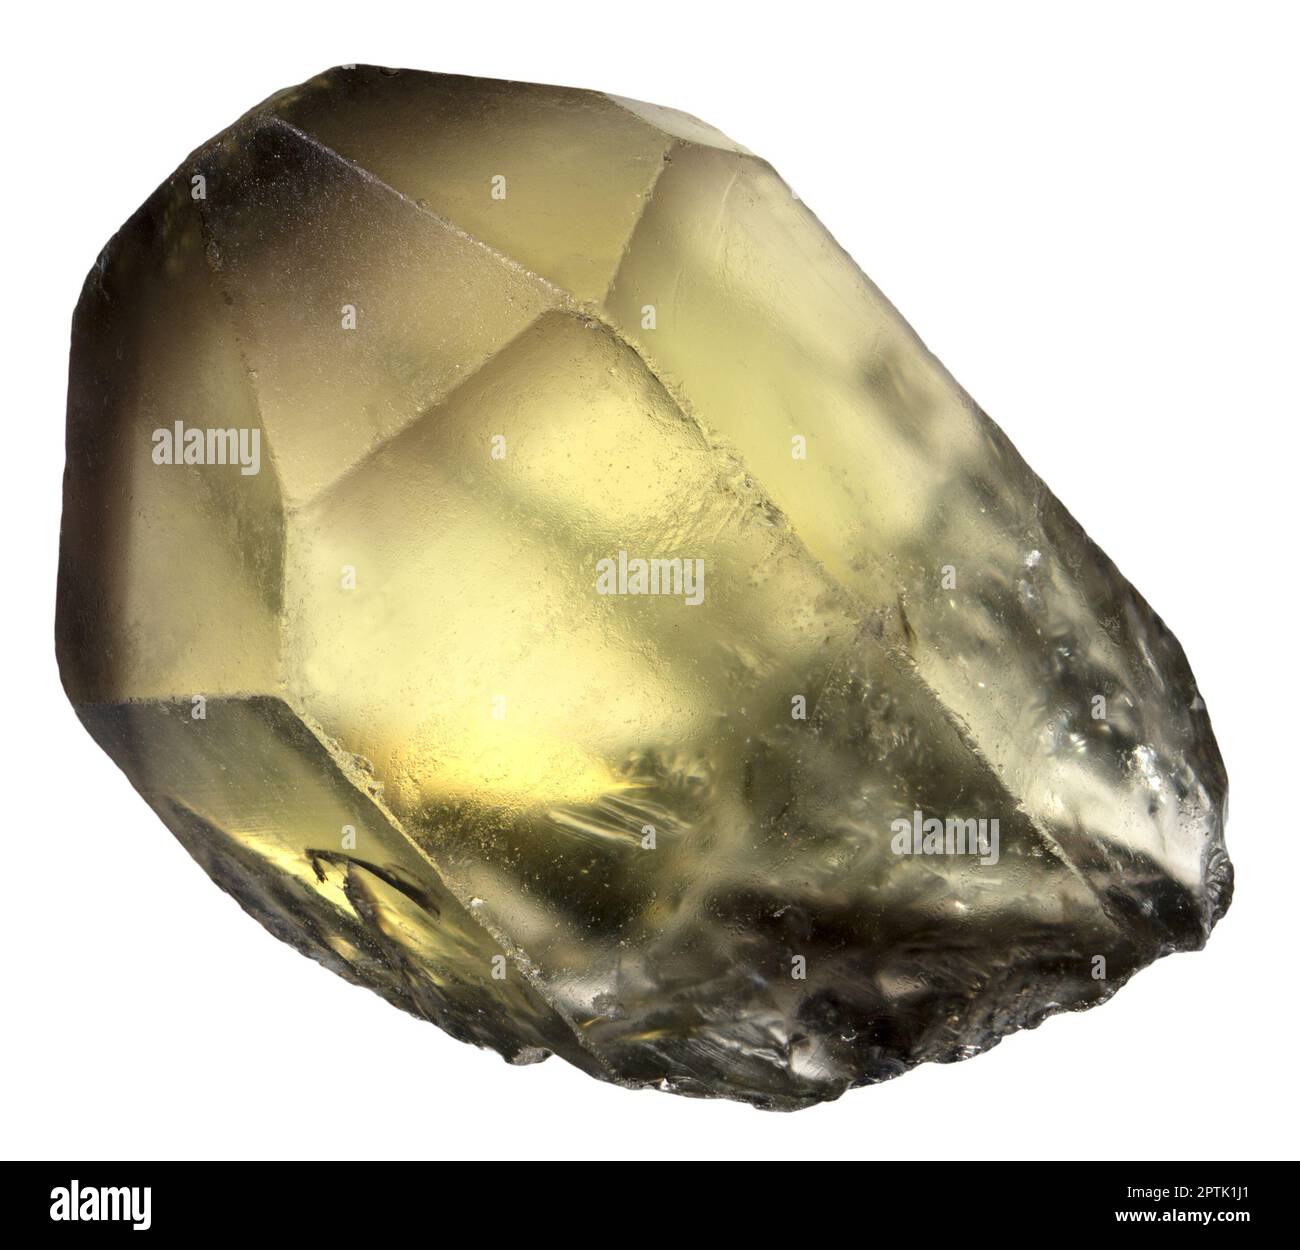 Citrine point - yellow quartz - c1.5cm long Stock Photo